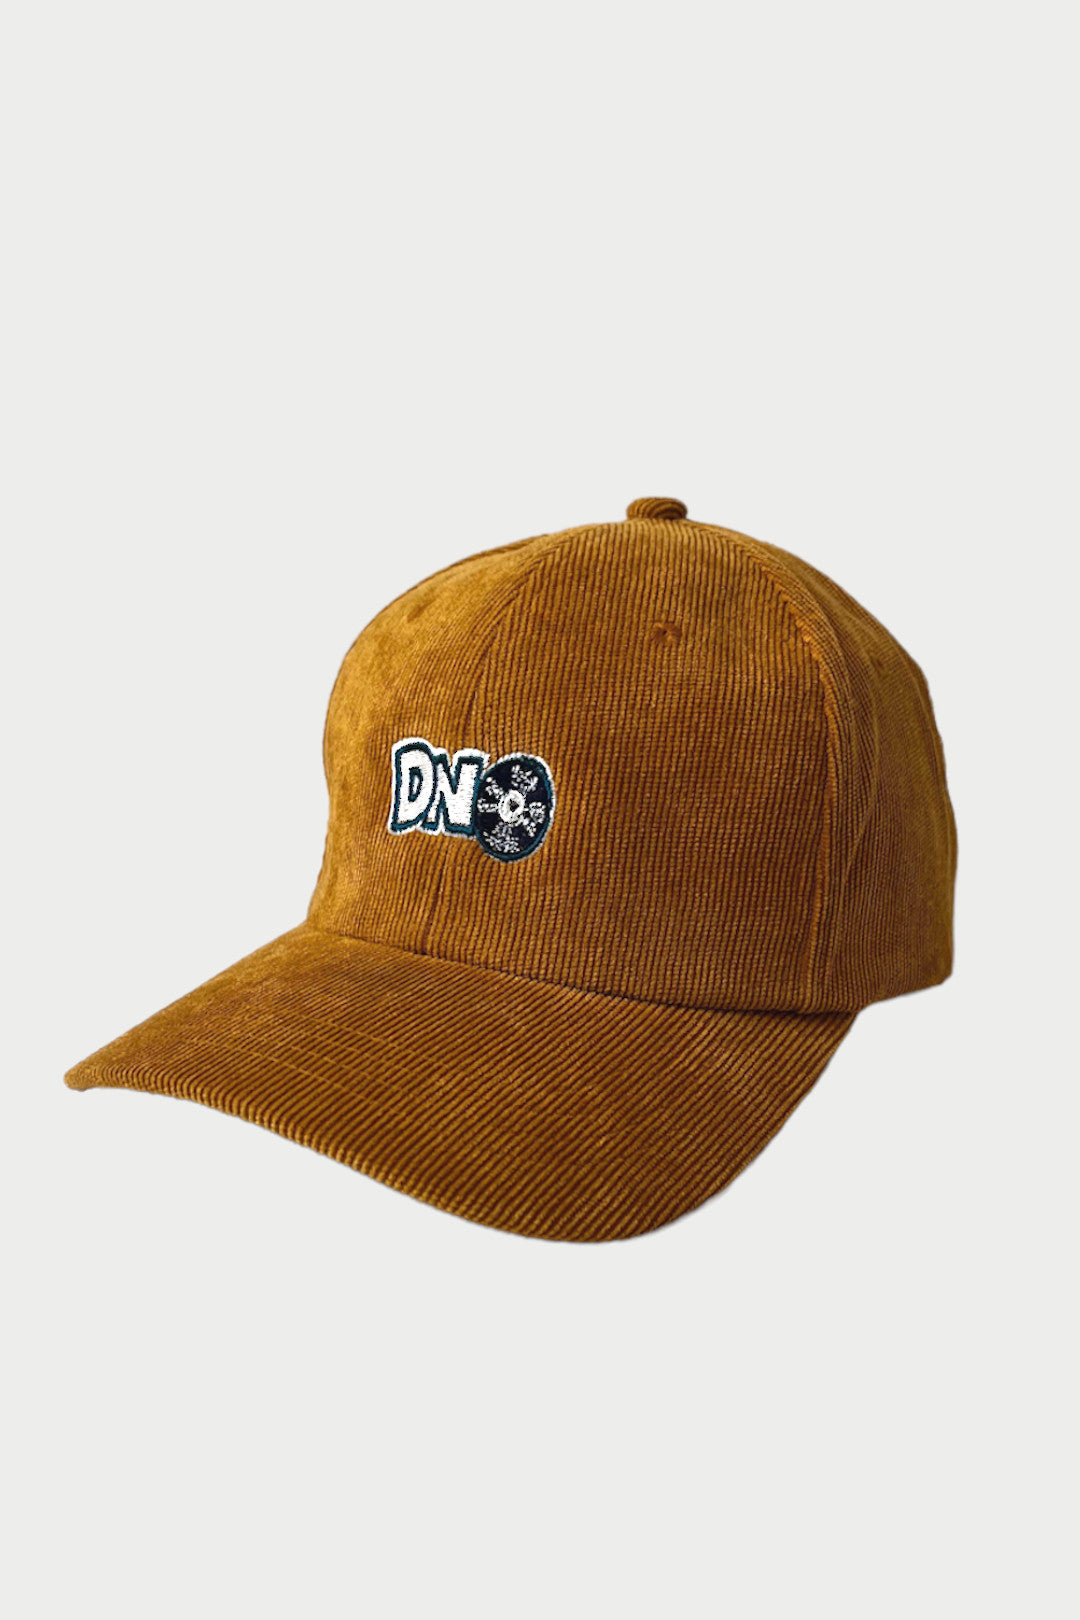 DNO Record Hat